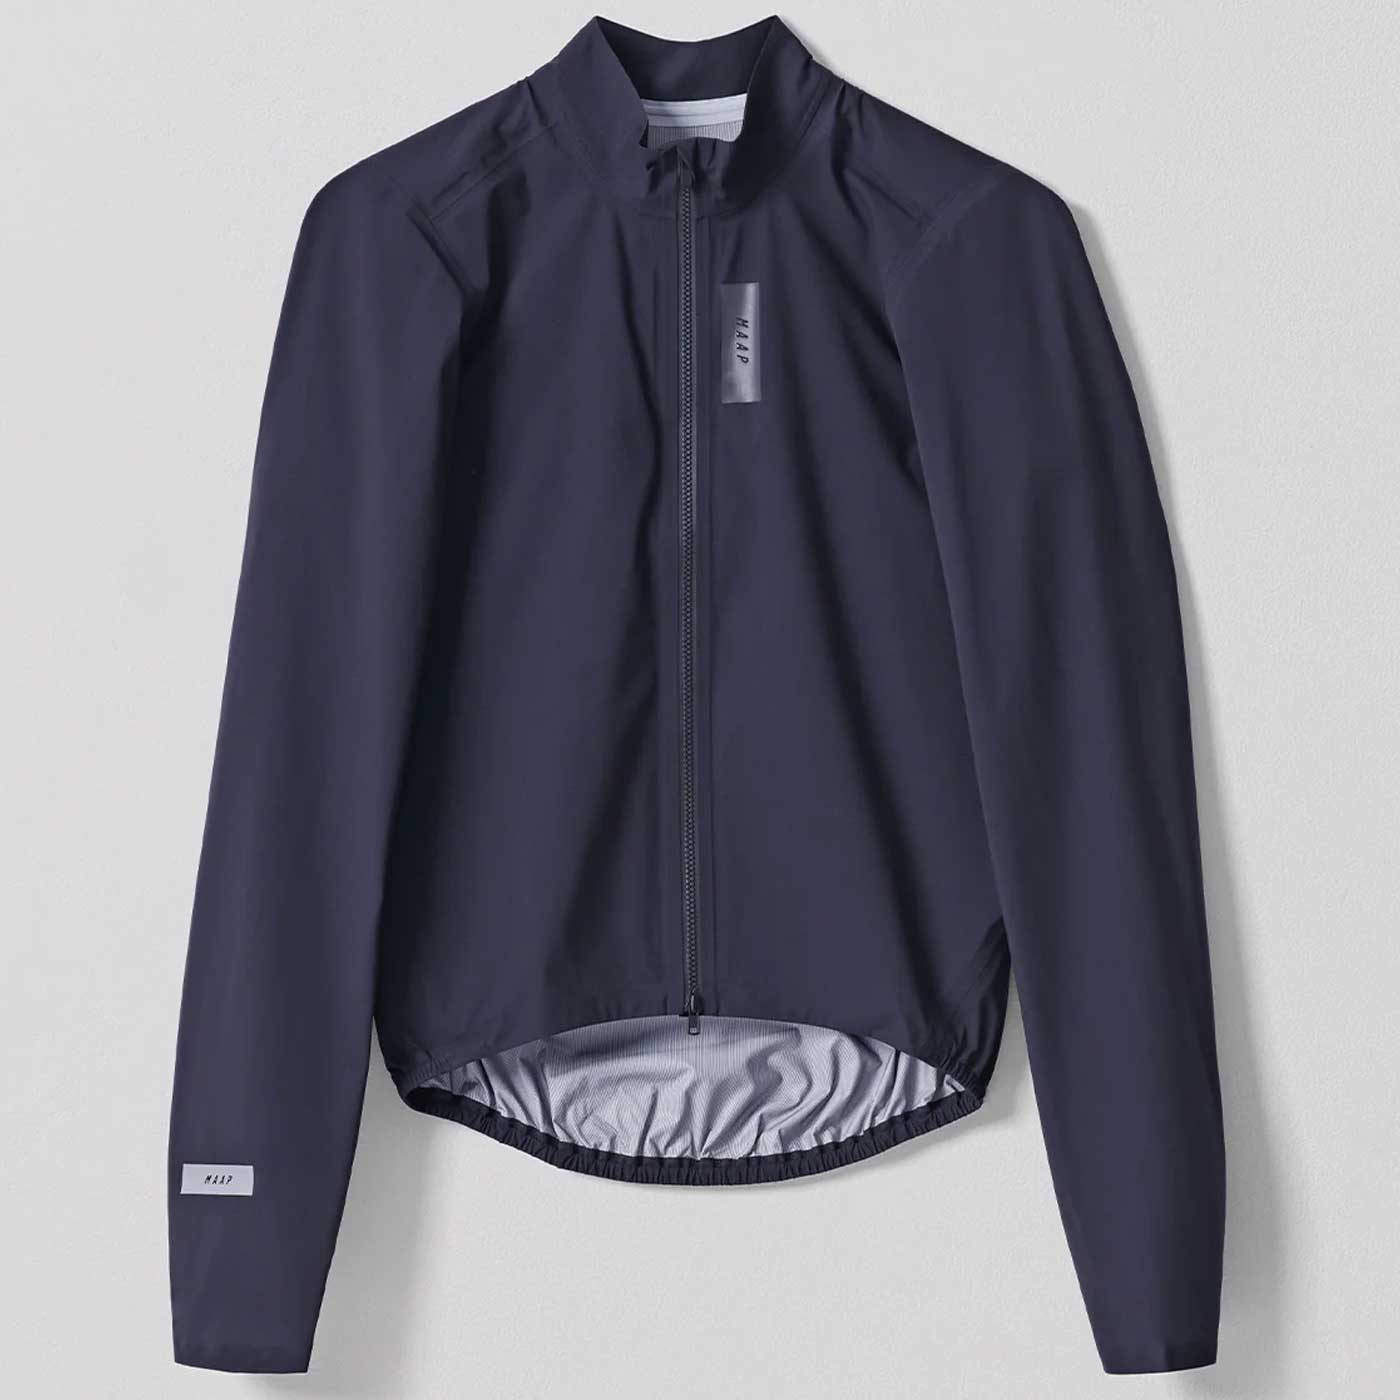 Thermal Pro Fleece Jacket - MAAP Cycling Apparel